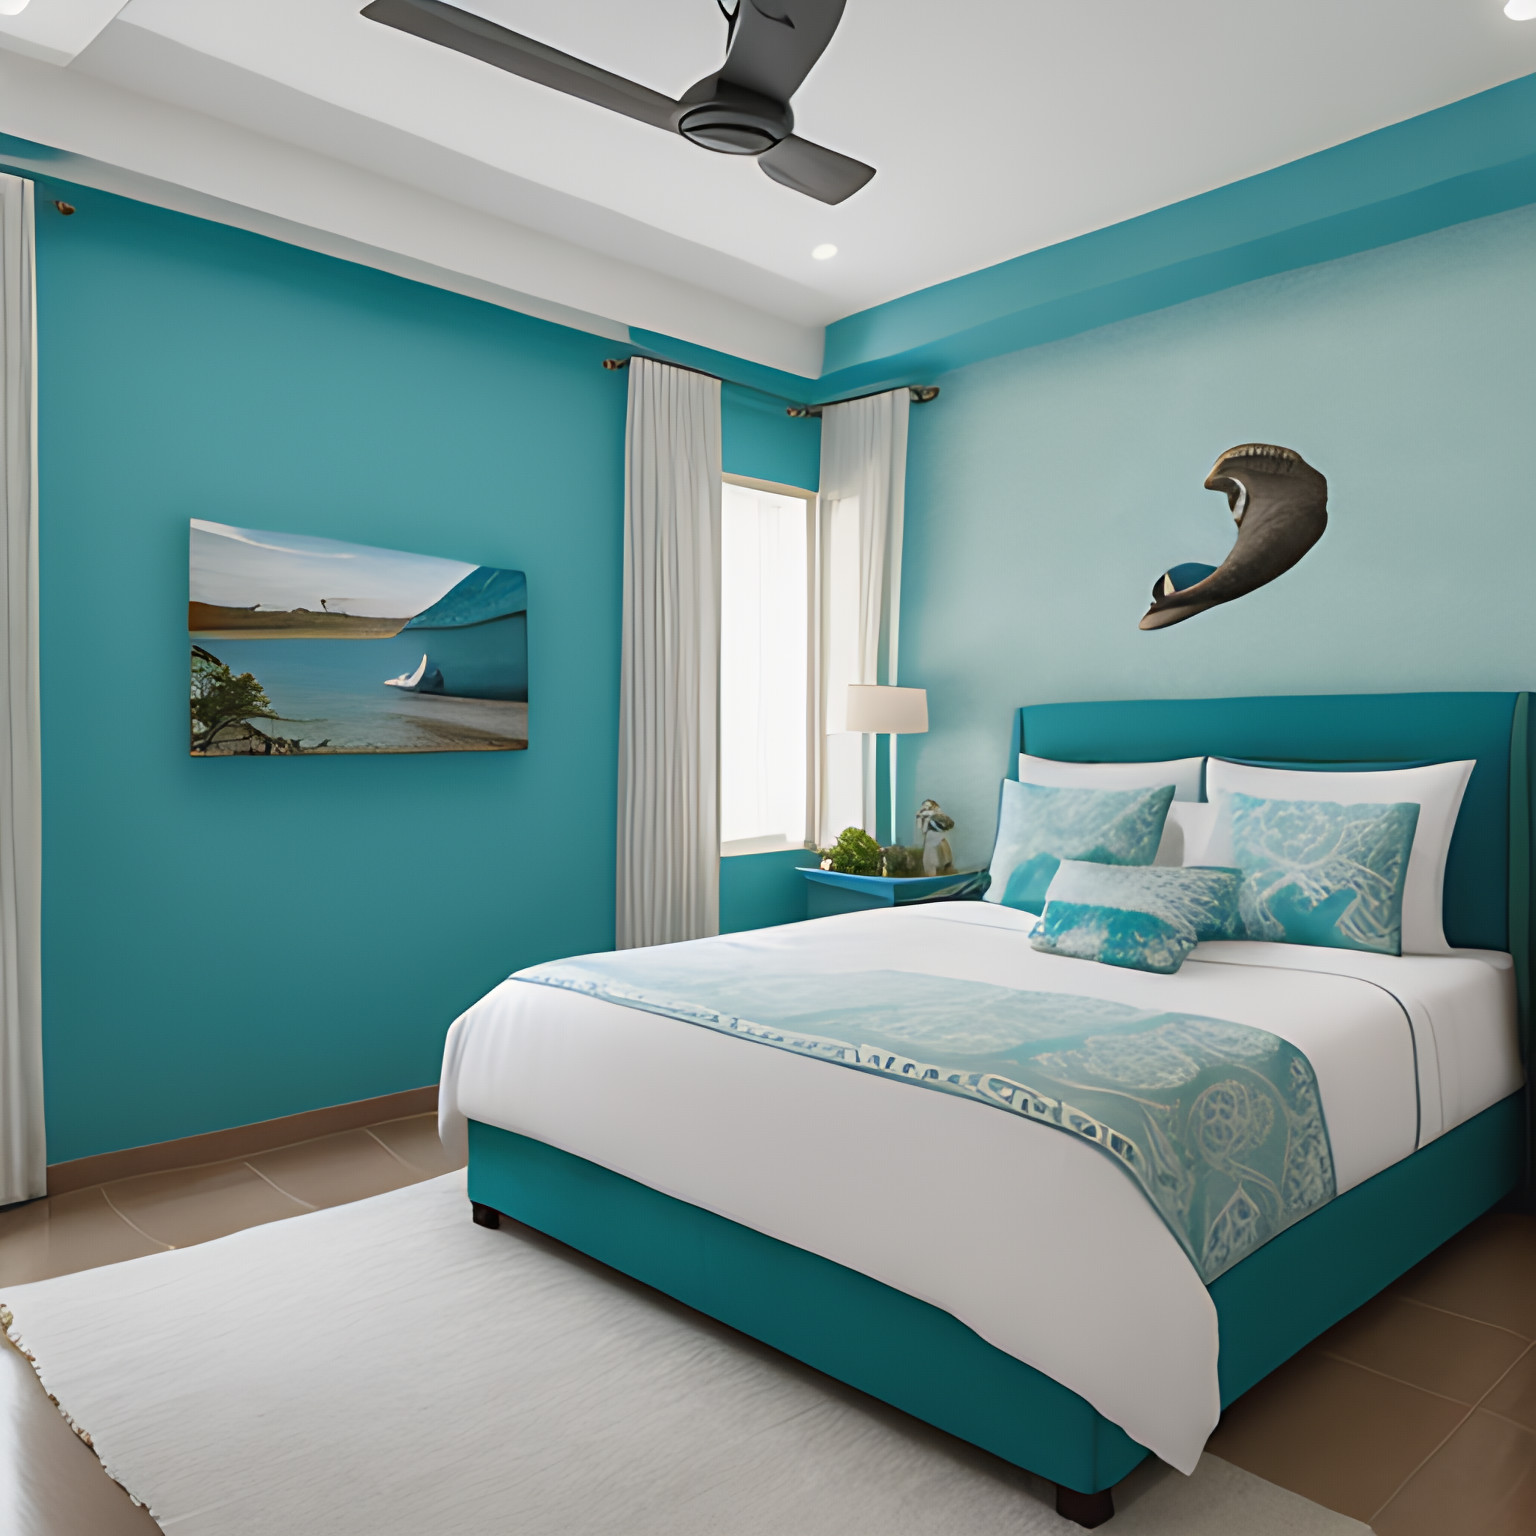 Beauty of coastal-themed bedroom design in India